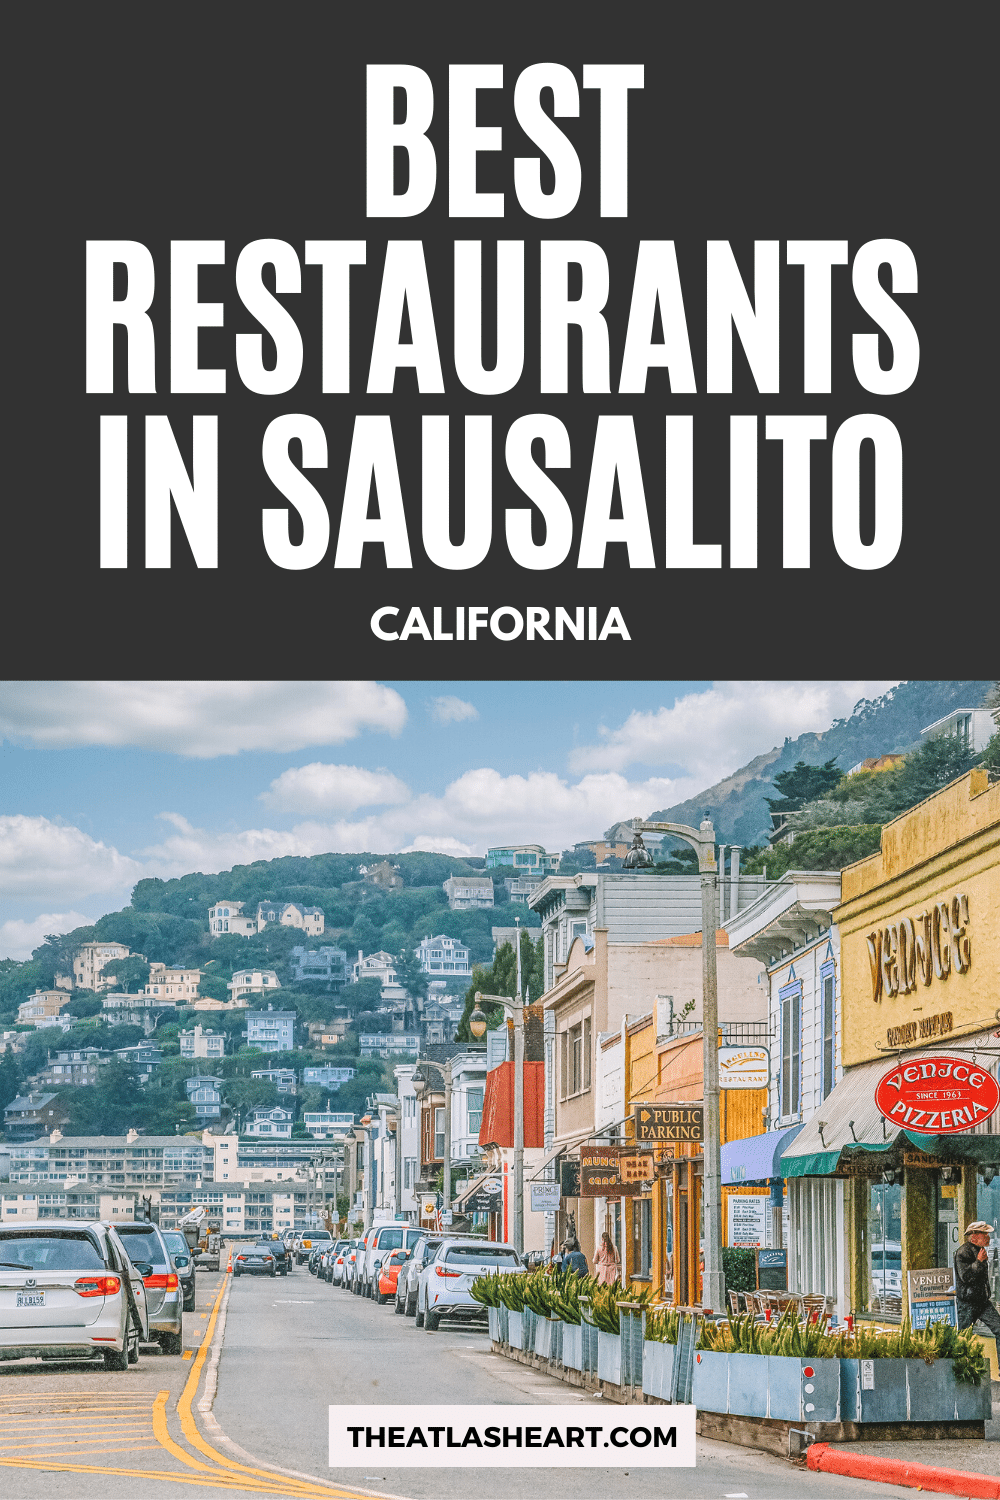 15 Best Restaurants in Sausalito, California (Ultimate Foodie Guide) 